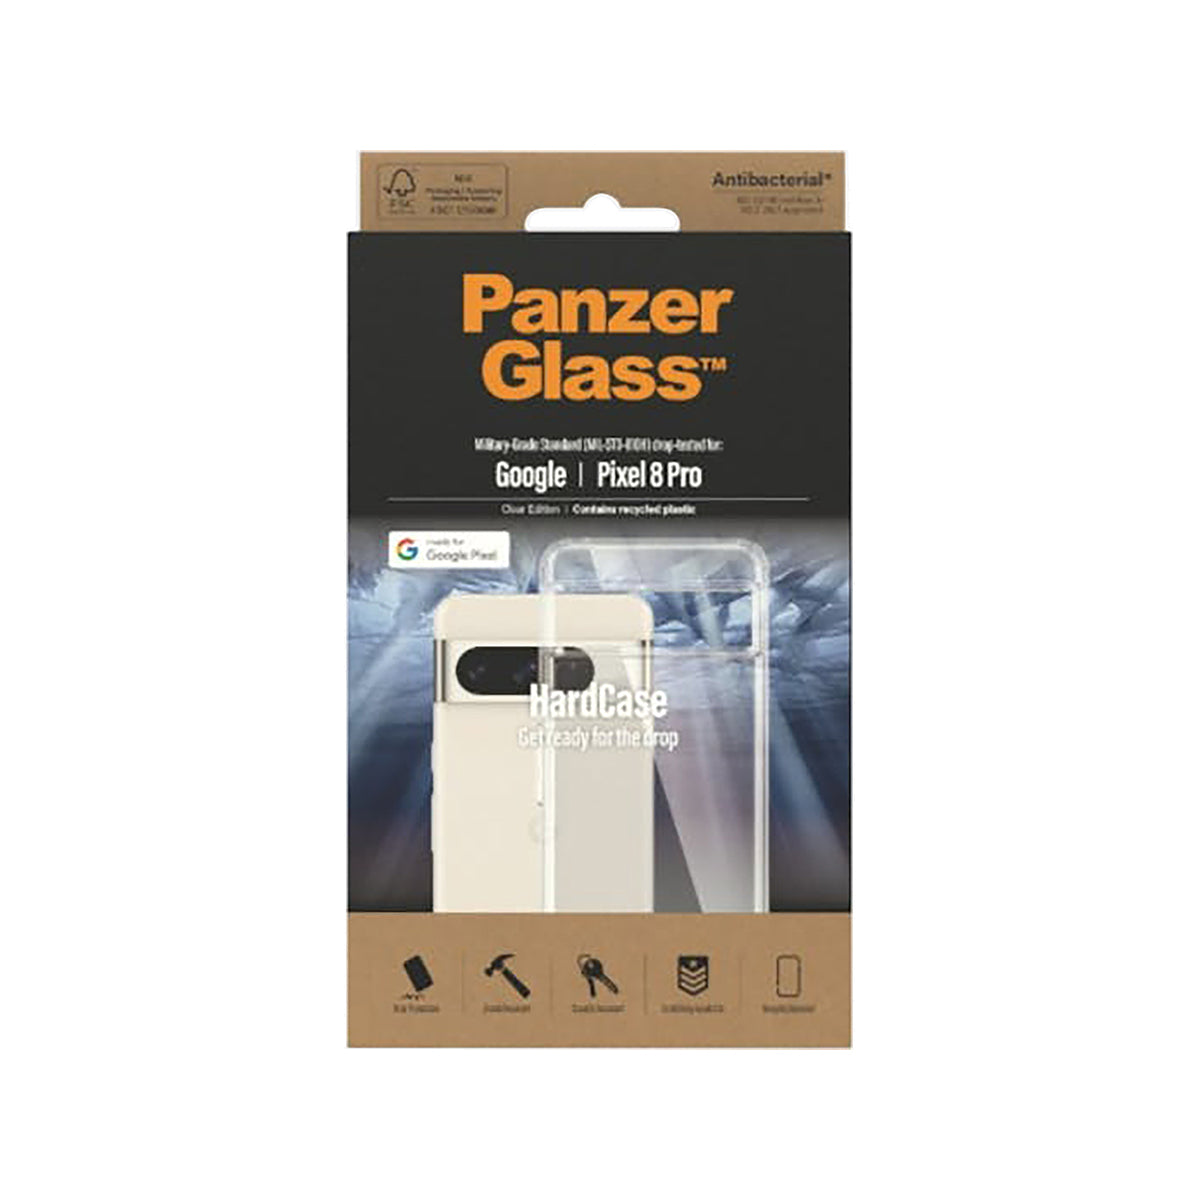 PanzerGlass Hardcase Phone Case For Google Pixel 8 Pro